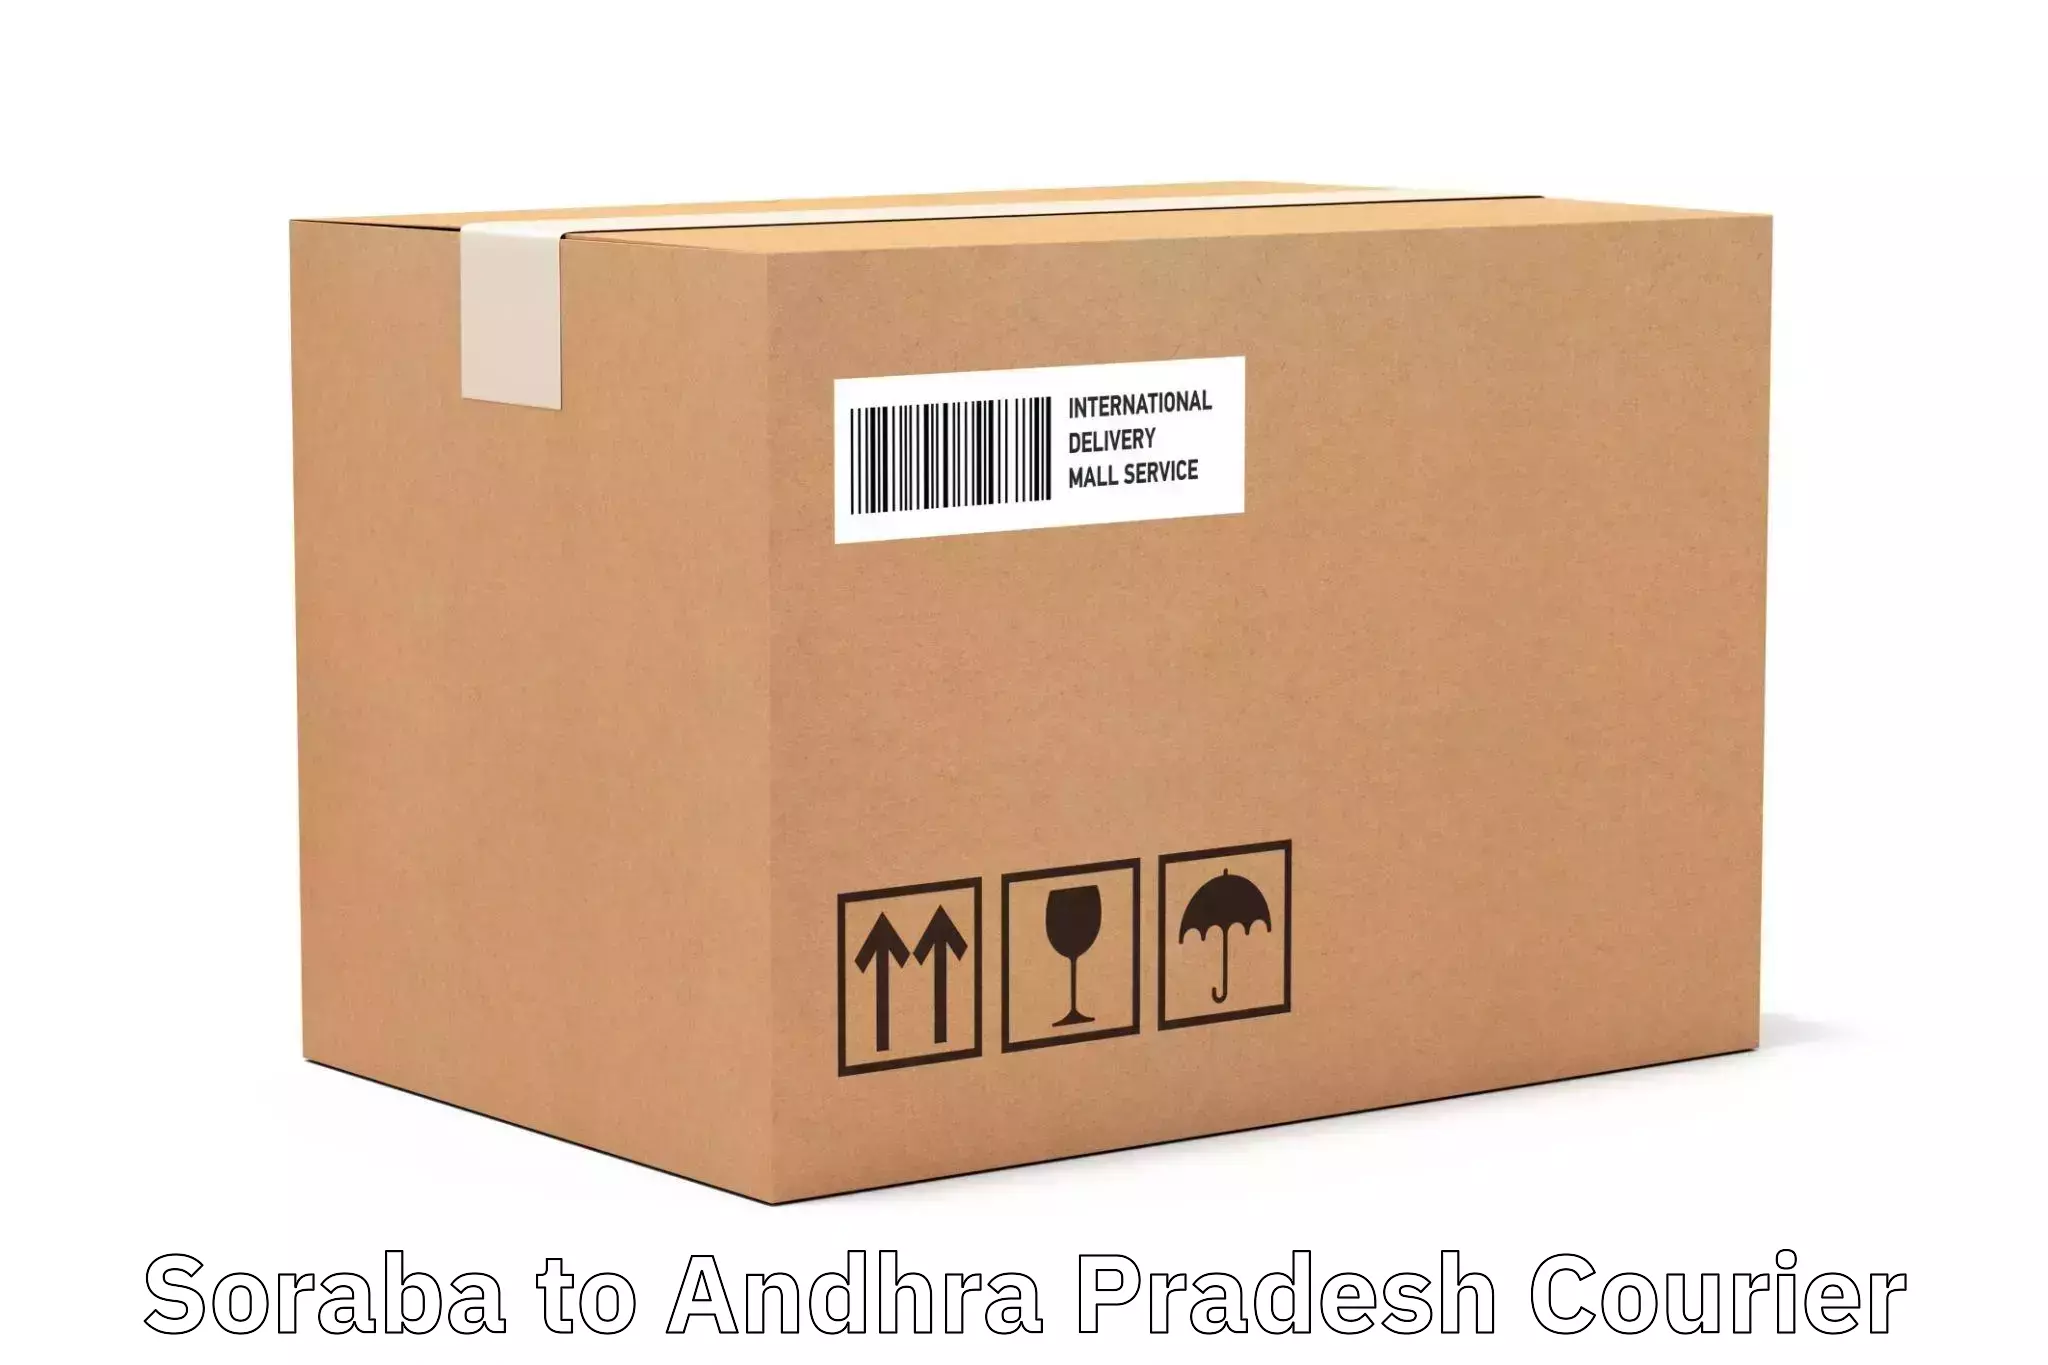 Express courier capabilities Soraba to Kalyandurg